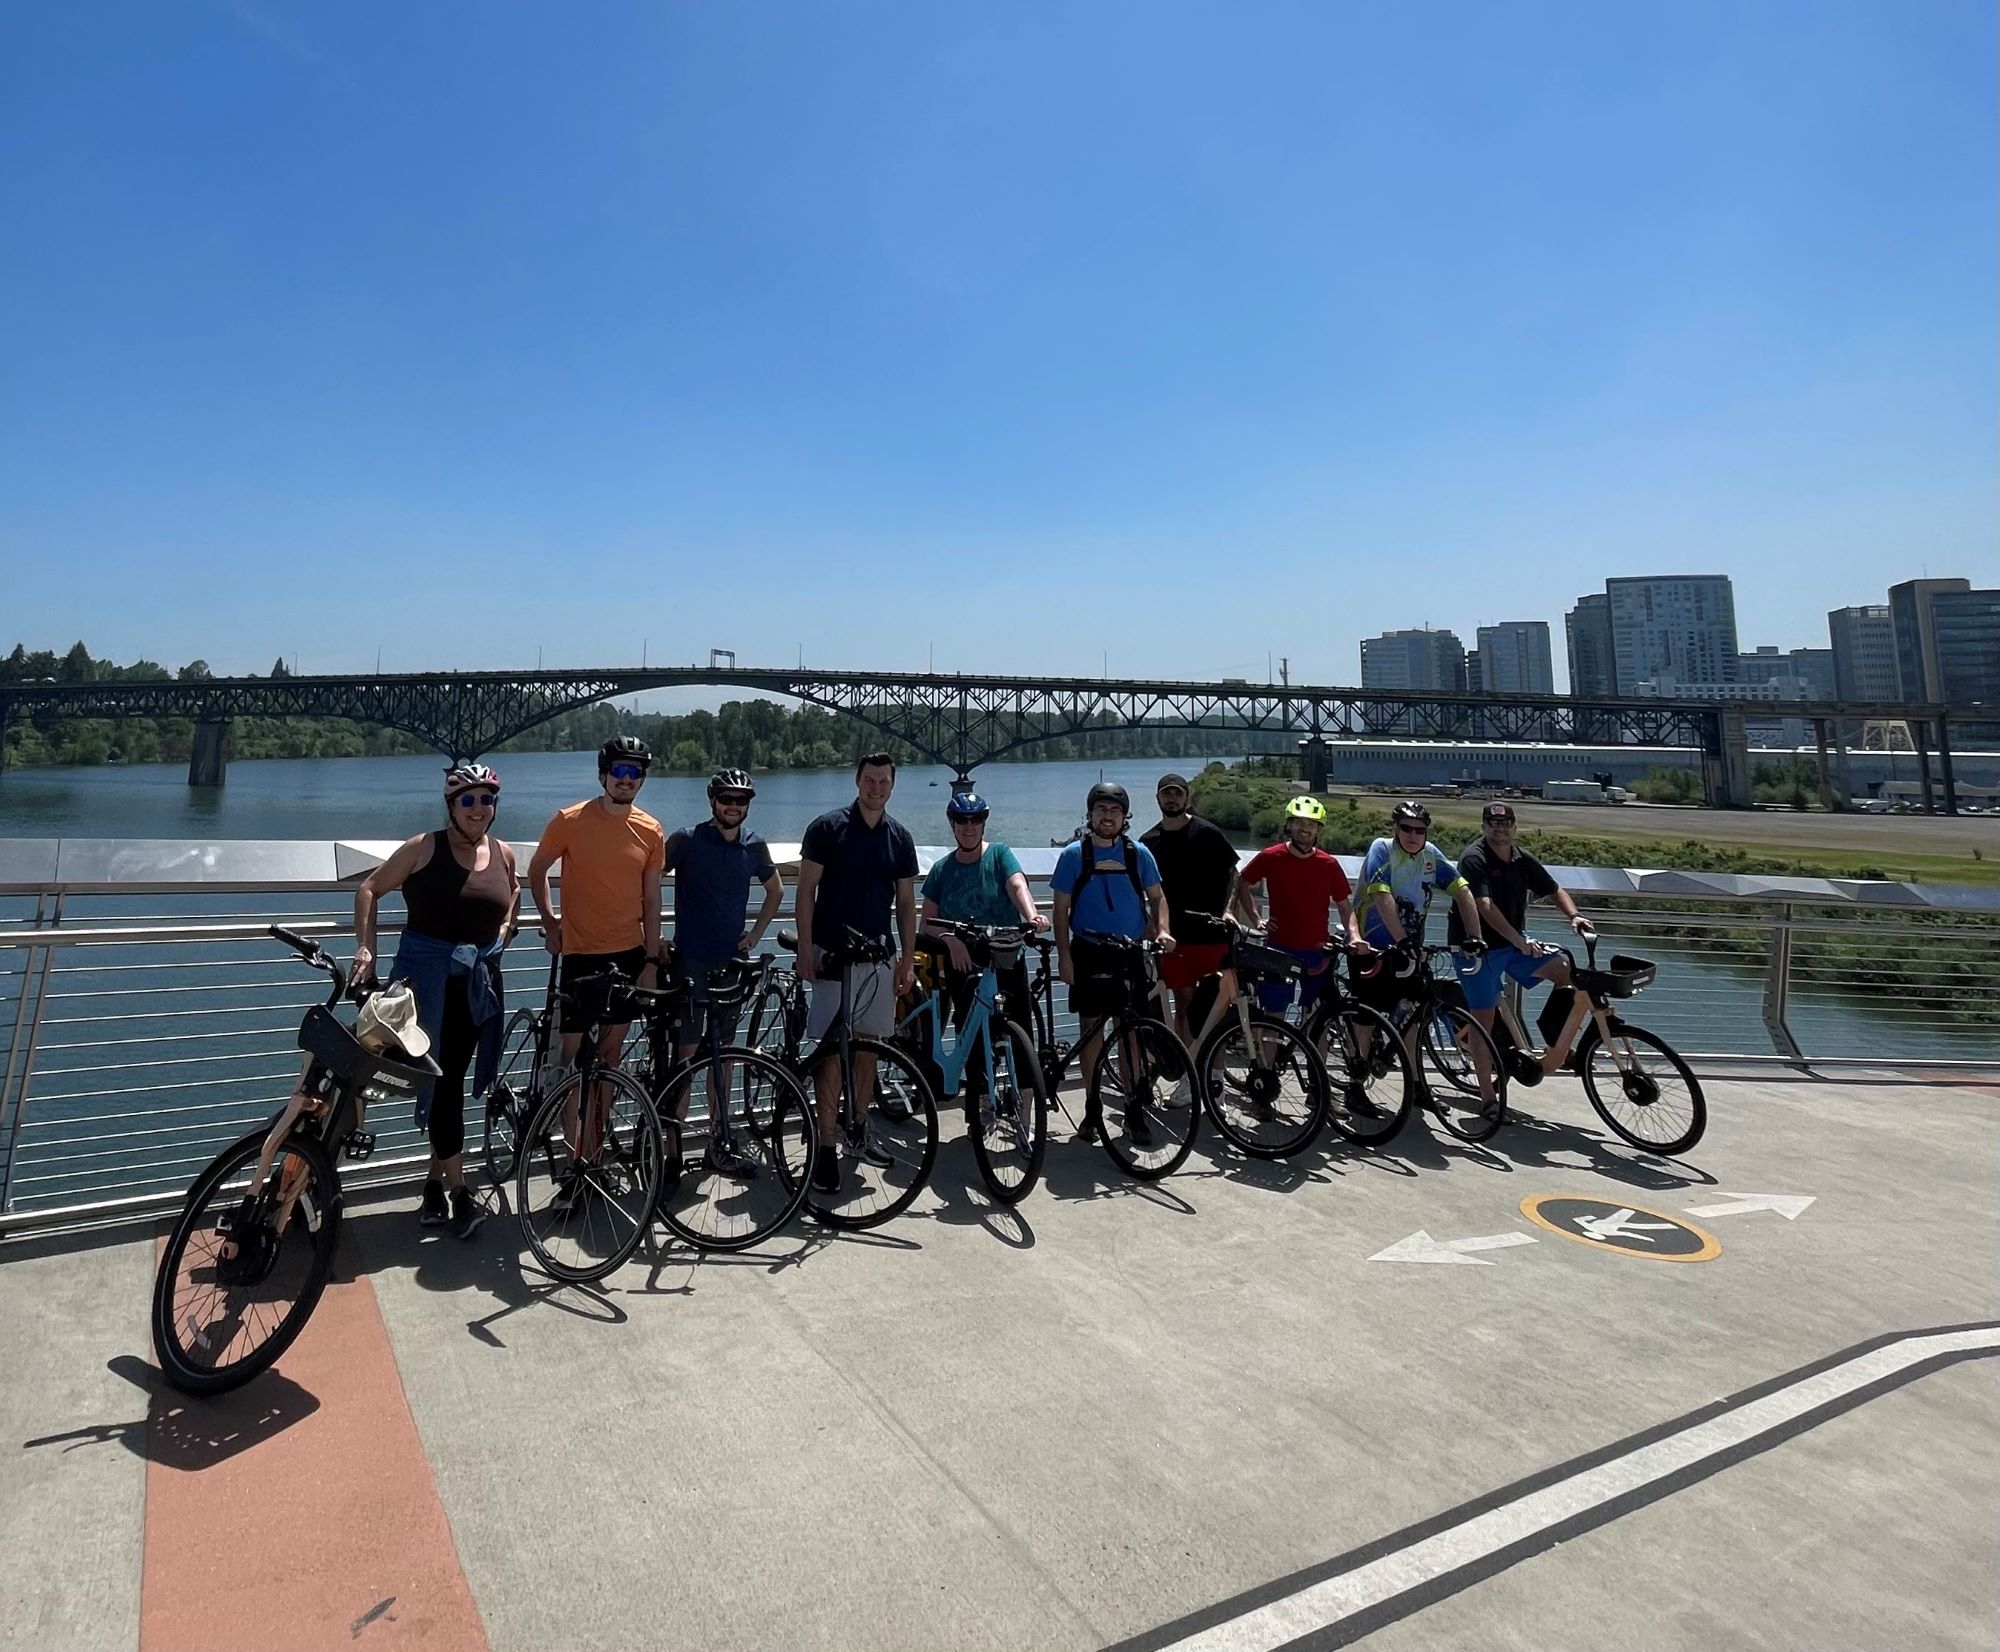 VLMK Staff on a group bike ride posing for a photo on the pedestrian bridge